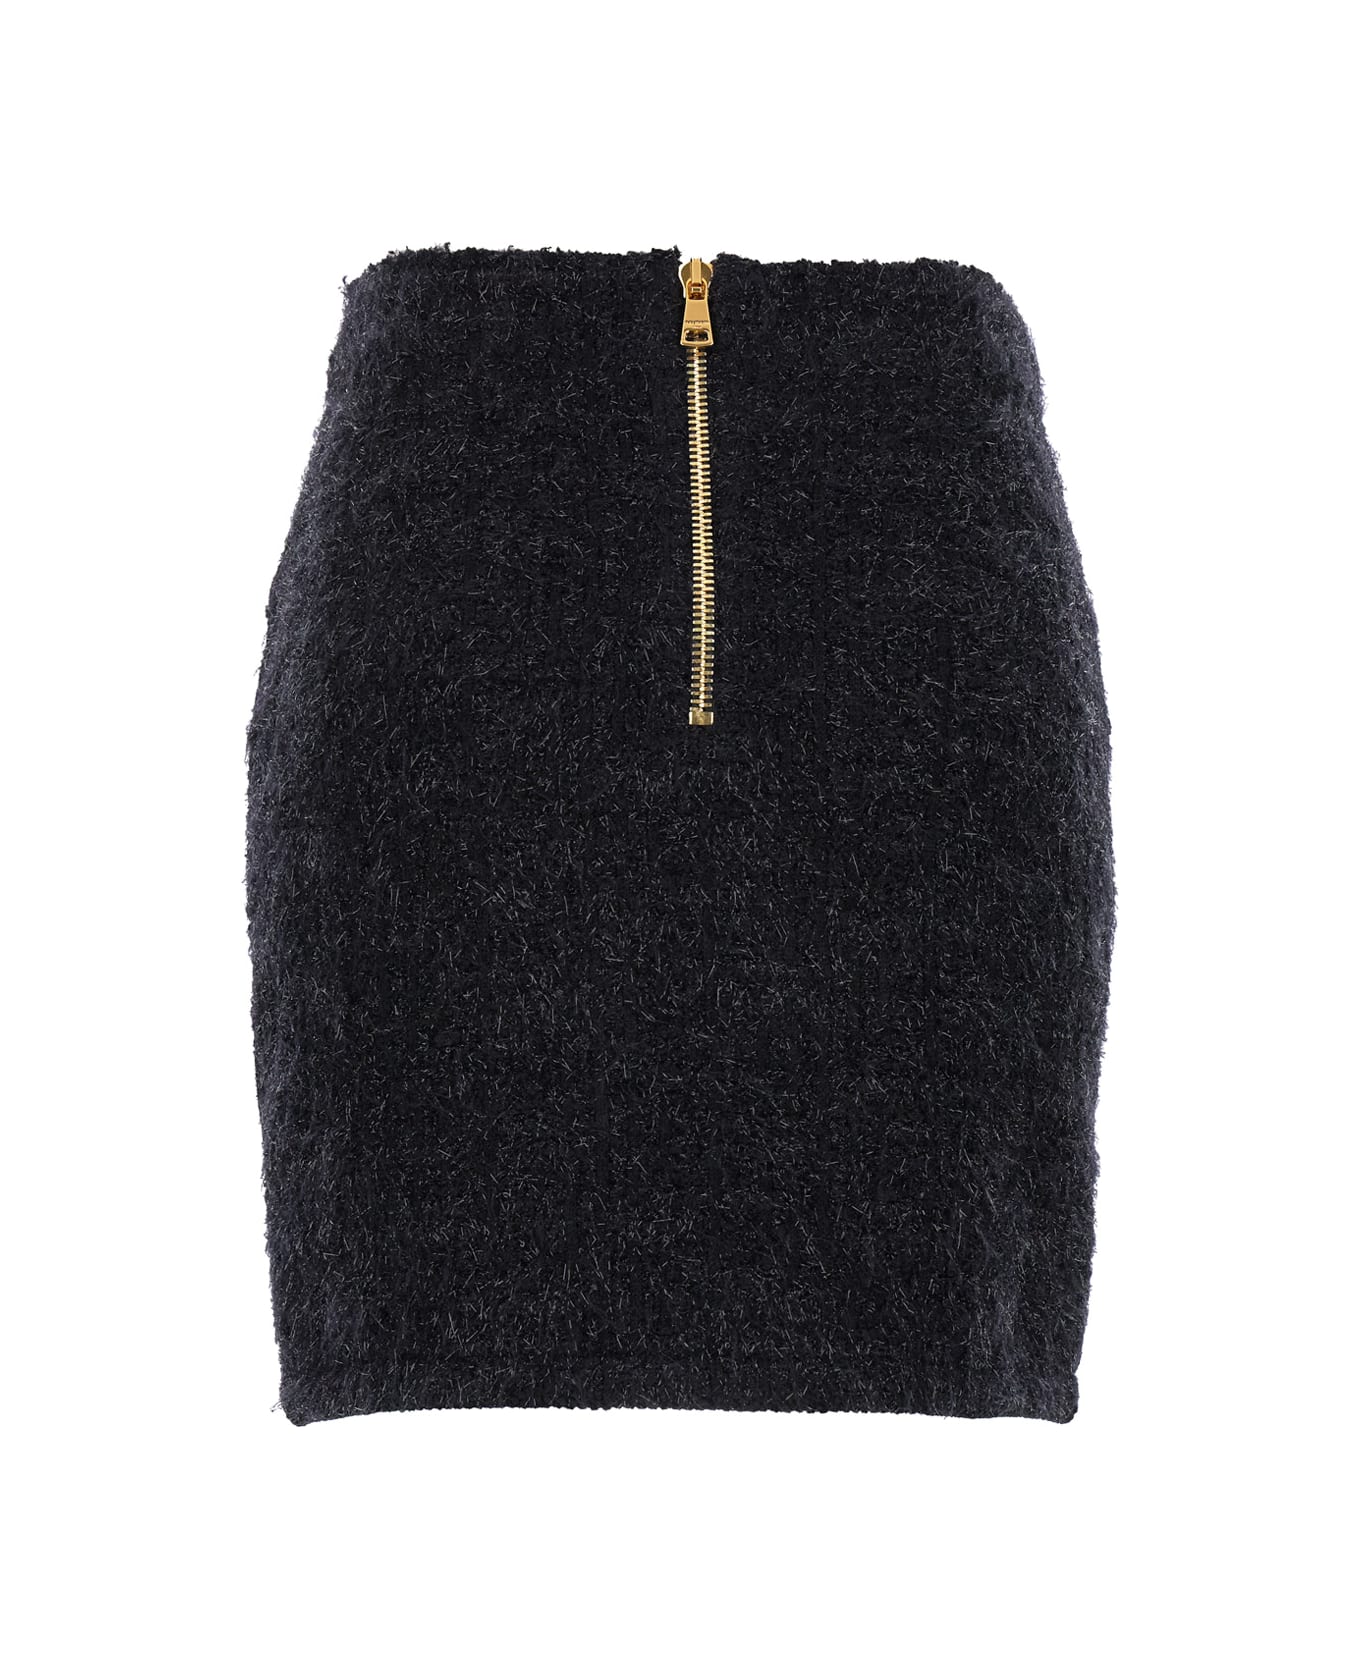 Balmain Black Pencil Mini Skirt With Jewel Buttons In Tweed Woman - Black